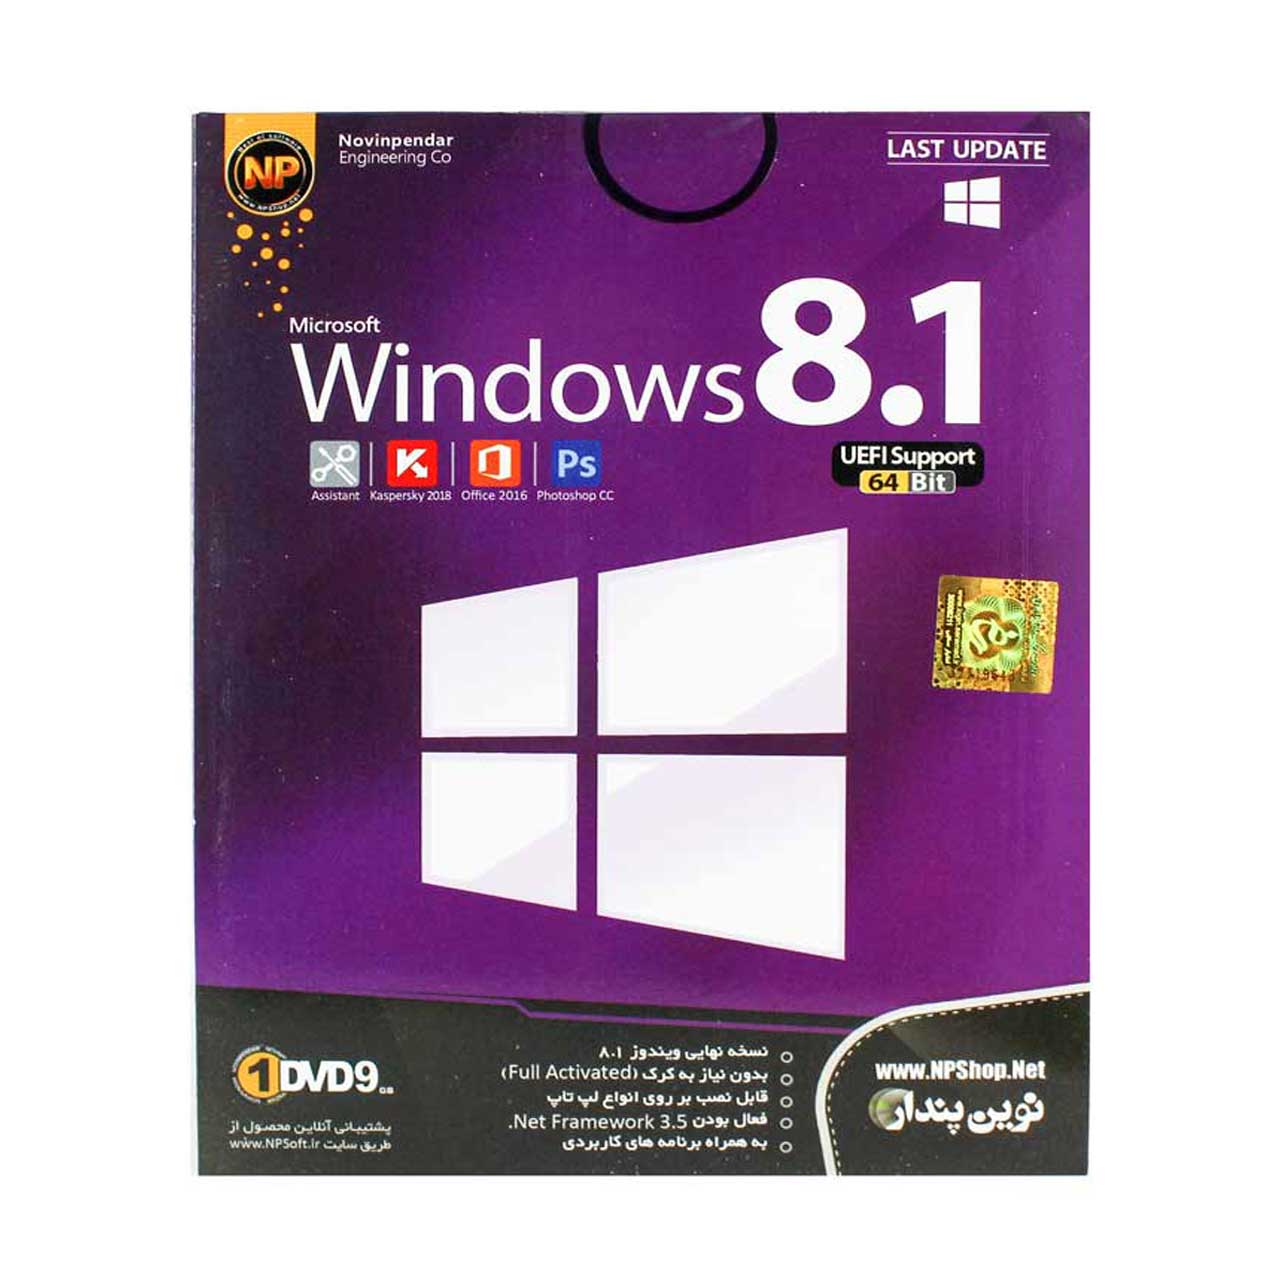 ویندوز Windows 8.1 UEFI Support 

Windows 8.1 UEFI Support 64 Bit